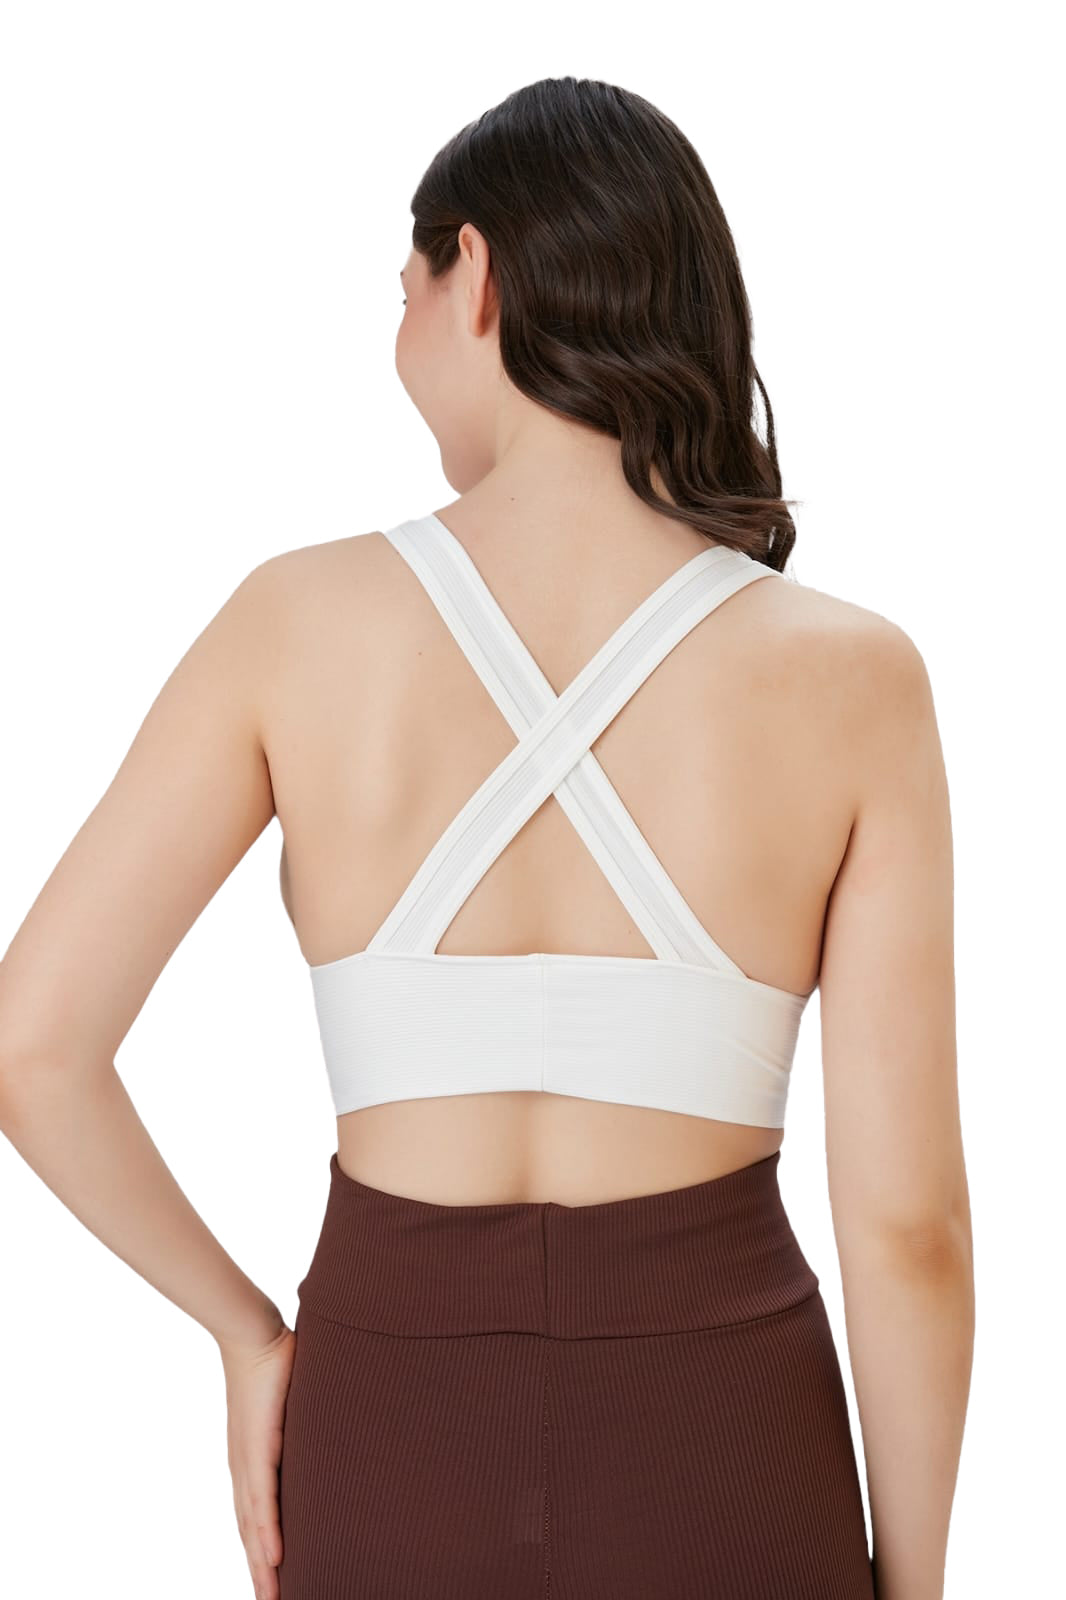 Ladies Padded Workout Wear, Comfortable Soft Plunge Neck Top - NEW ARRIVALS! - Wear Sierra